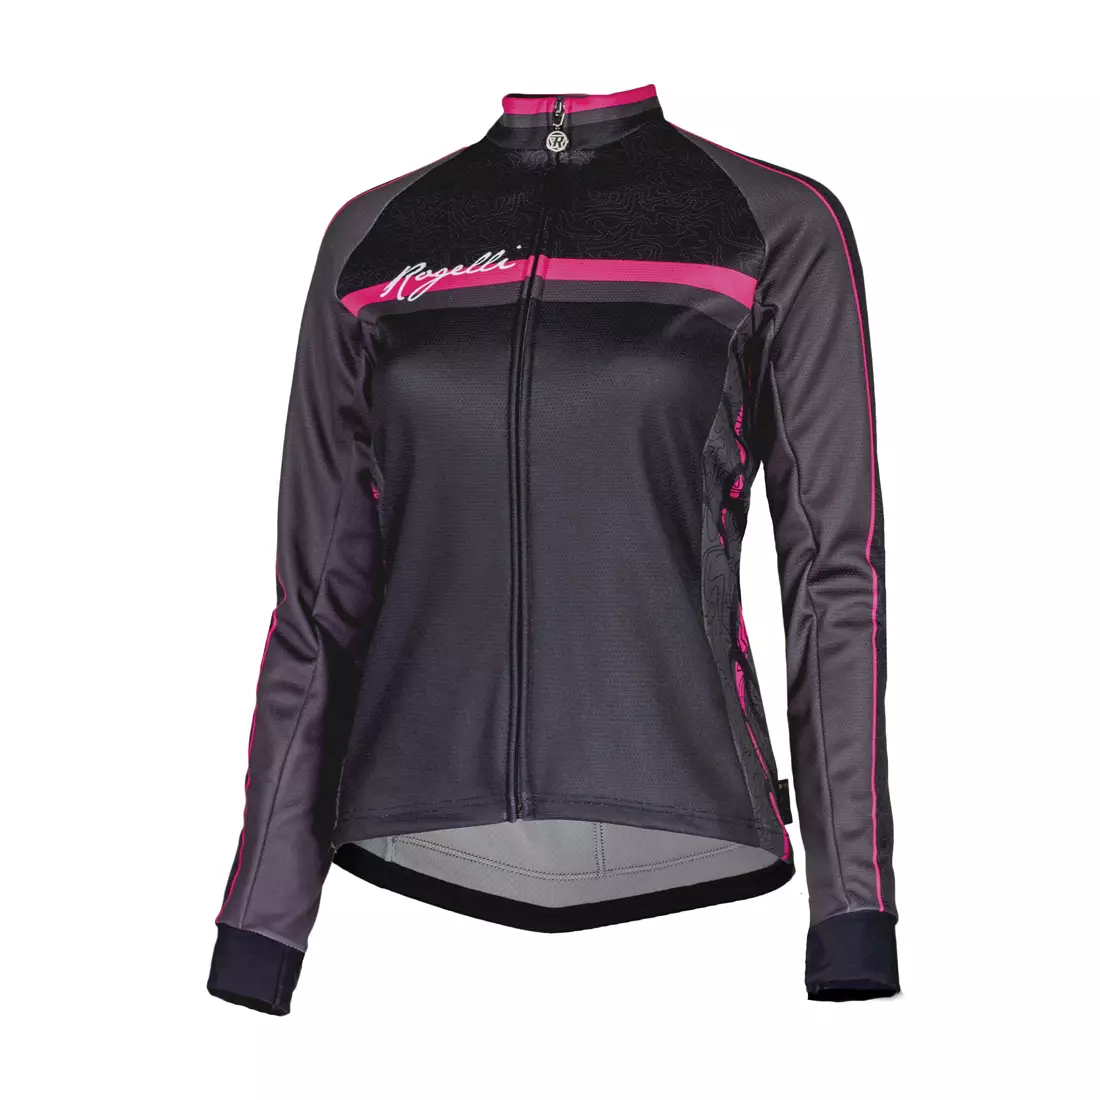 ROGELLI MANICA ROSA 010.137 women's cycling sweatshirt, black and pink